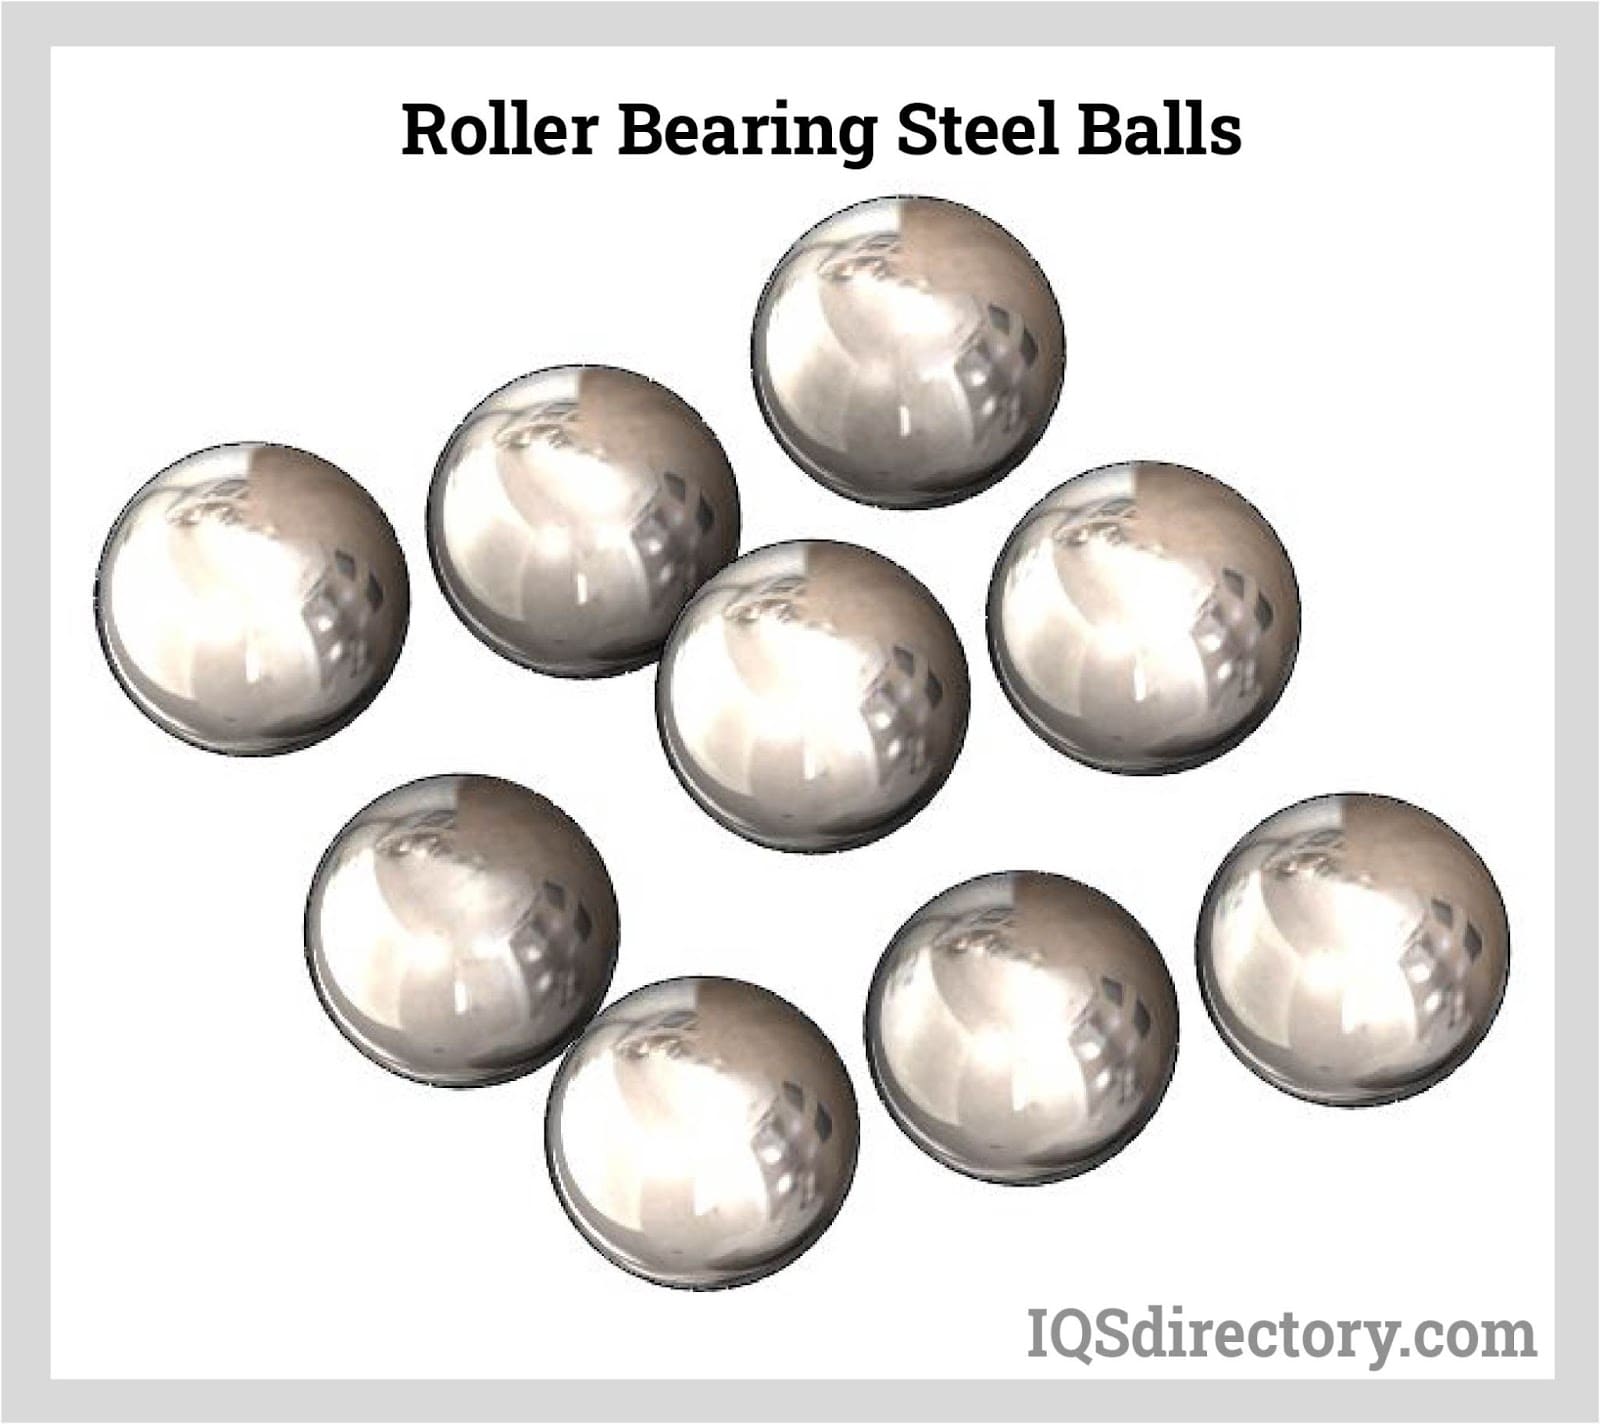 Roller Bearing Steel Balls